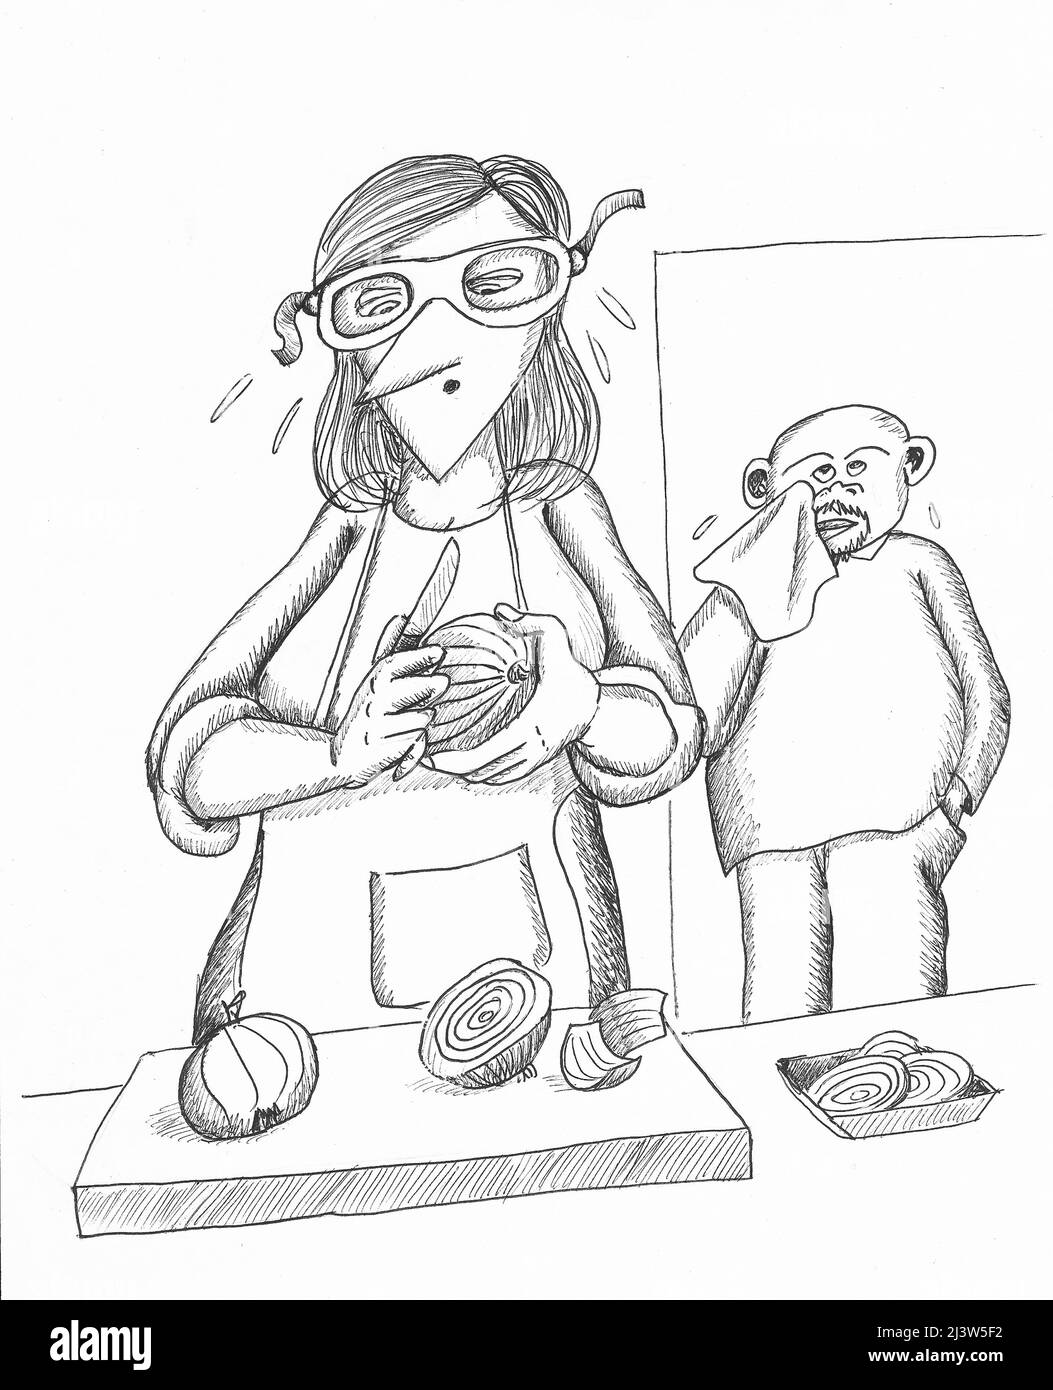 Woman peeling onions using goggles. Illustration. Stock Photo